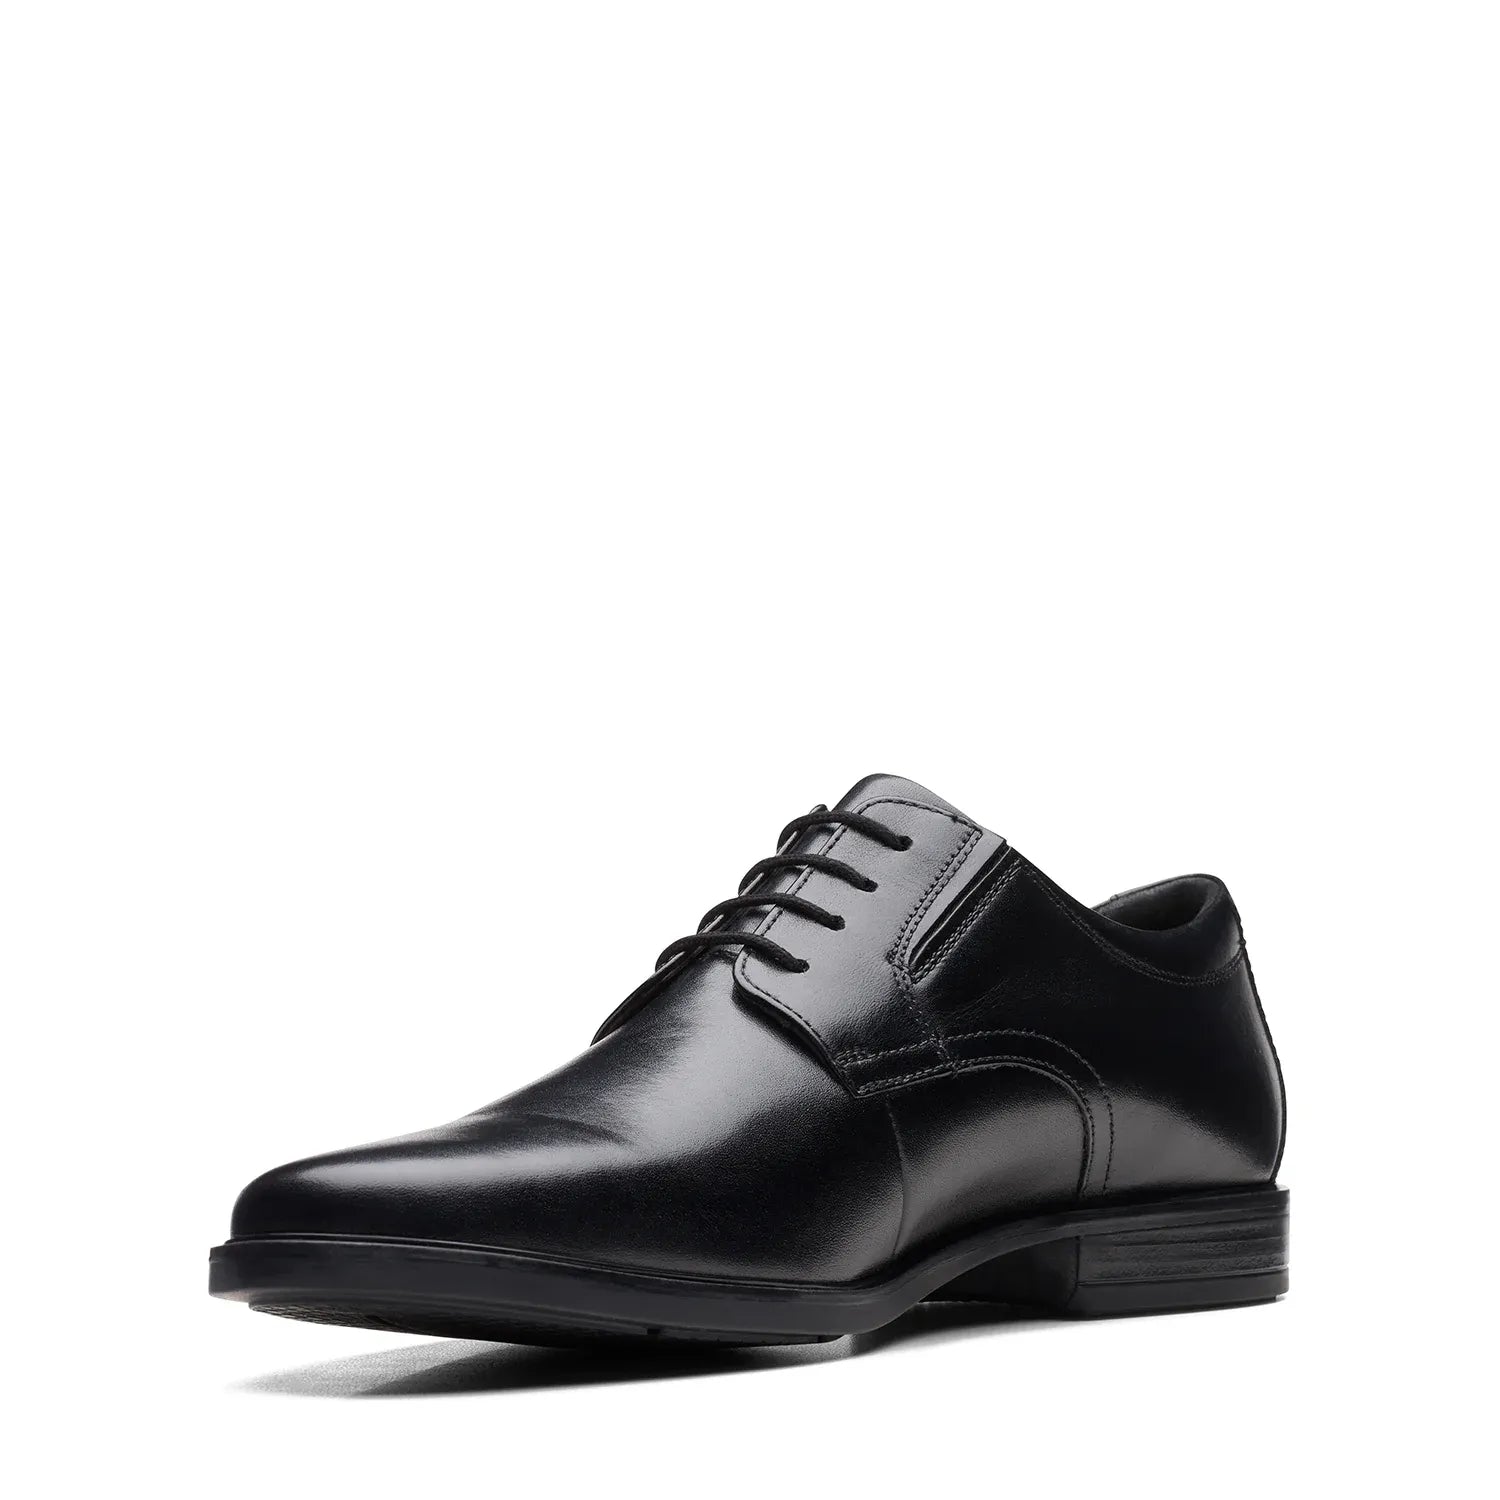 Clarks Men's Howard Walk Black Leather Shoes - Classic Black Leather